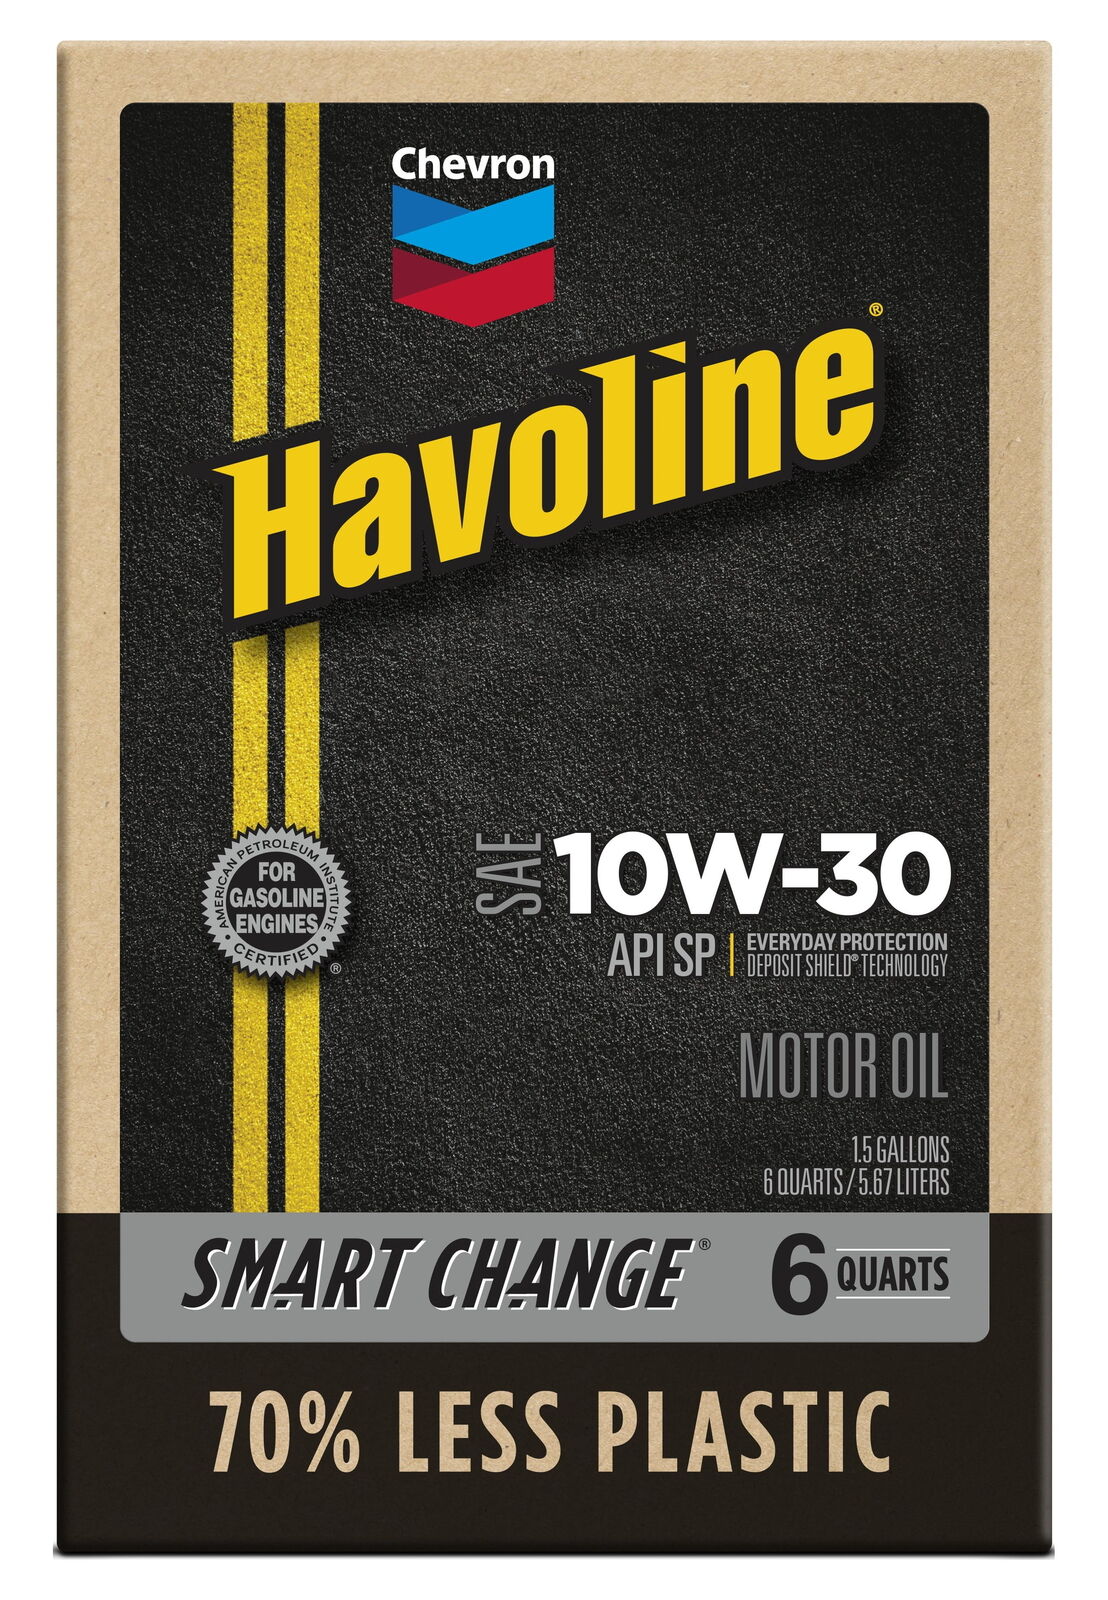 6 Quart Smart Change Chevron Havoline Conventional Motor Oil 10W-30, NEW